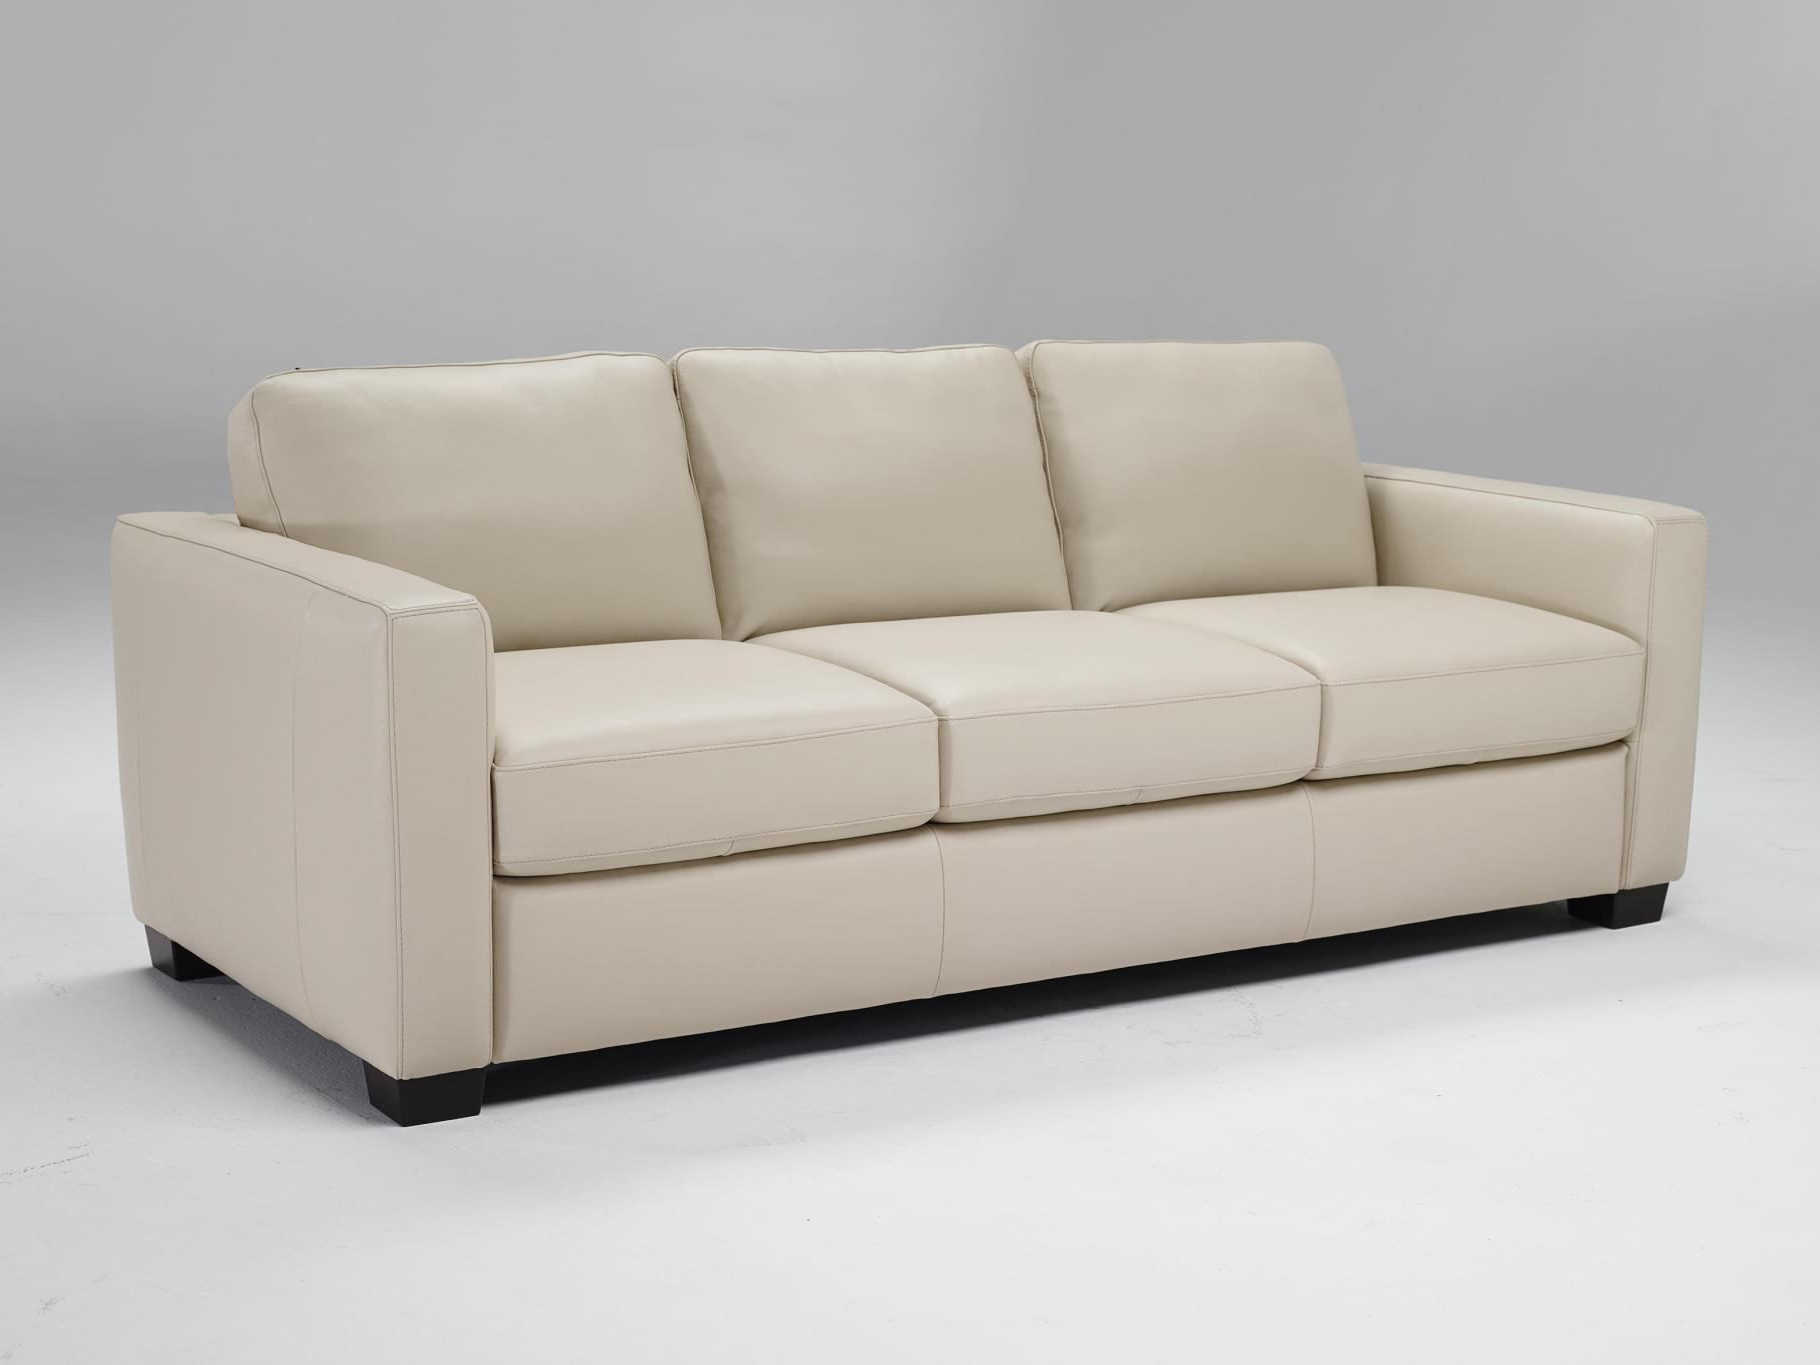 consumer reports natuzzi leather sofa